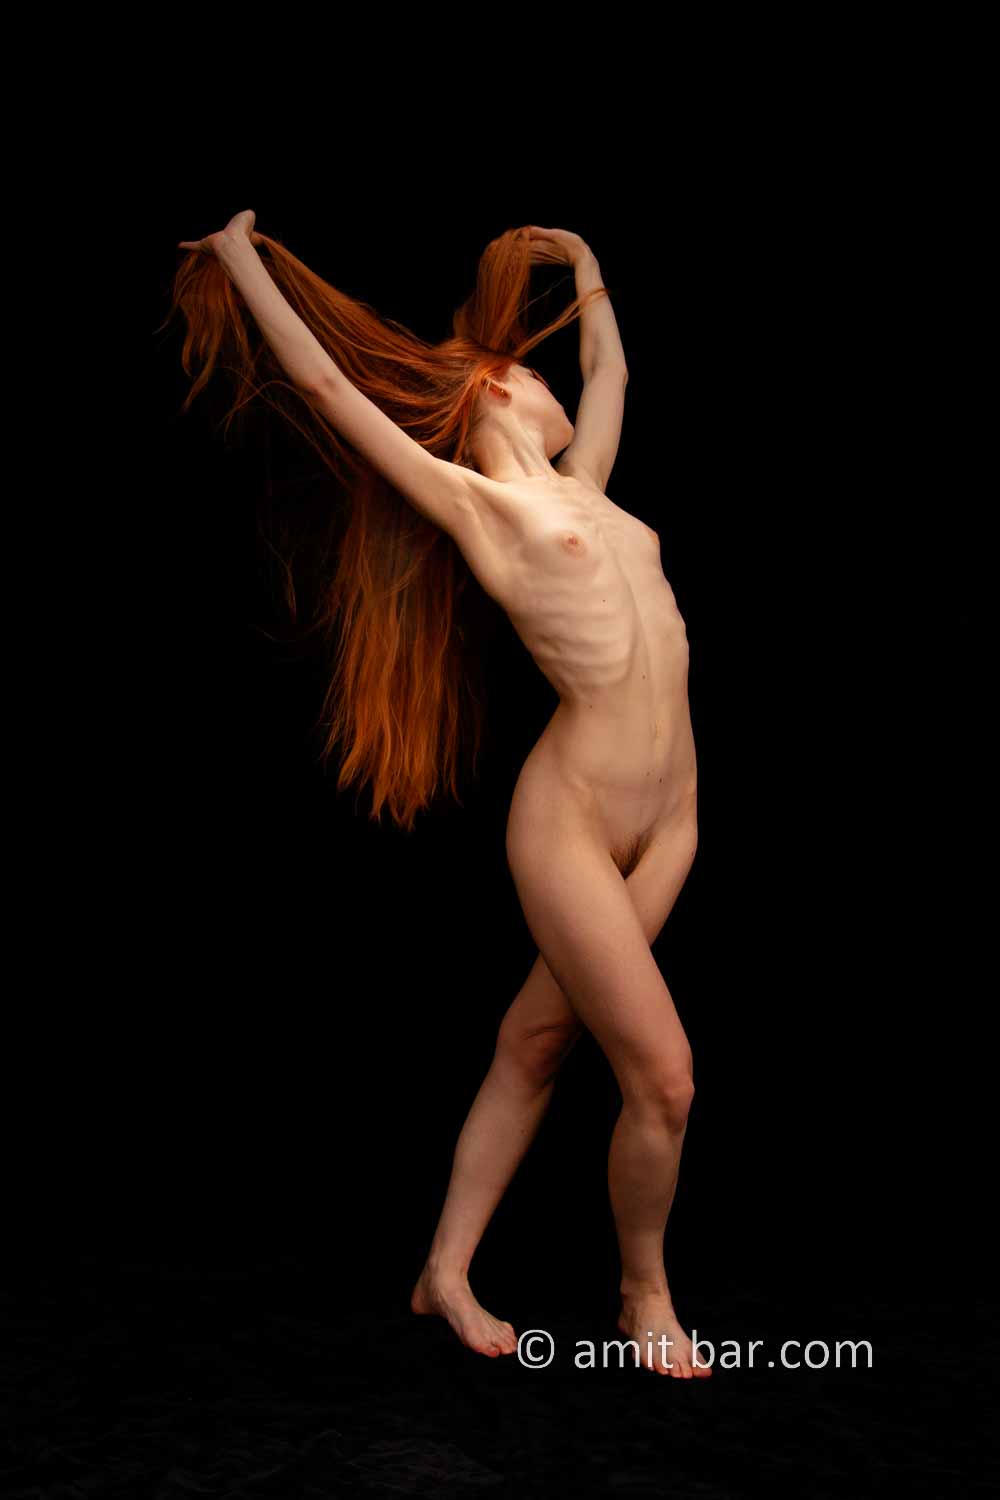 Ameria dancing III: Model Ameria is dancing in my studio and waving with her beautiful red hair